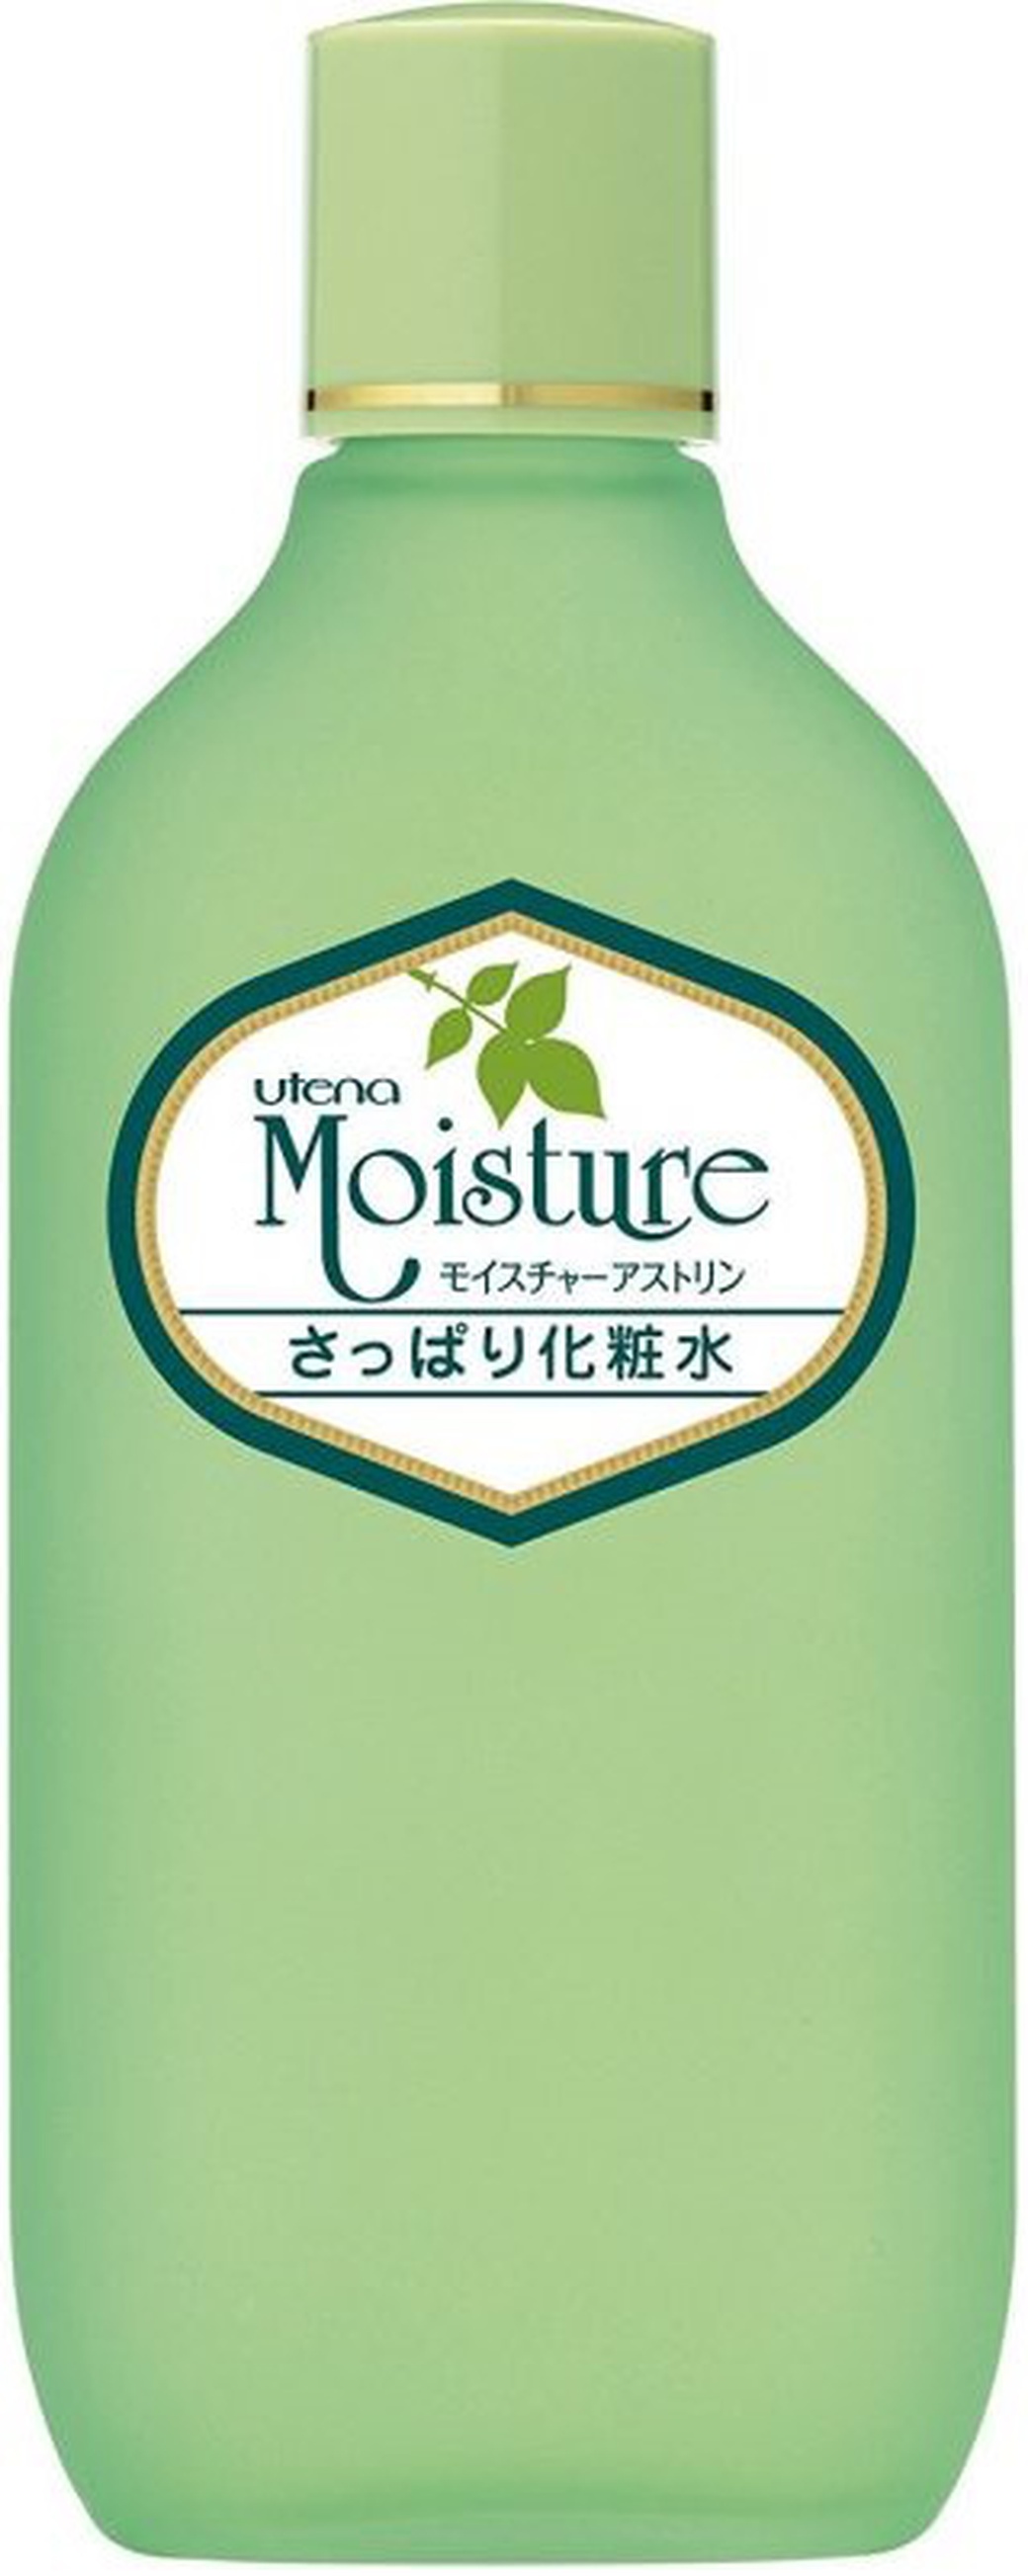 Utena "Moisture" Увлажняющий лосьон-молочко для лица, с экстрактом алоэ, 155 мл фото